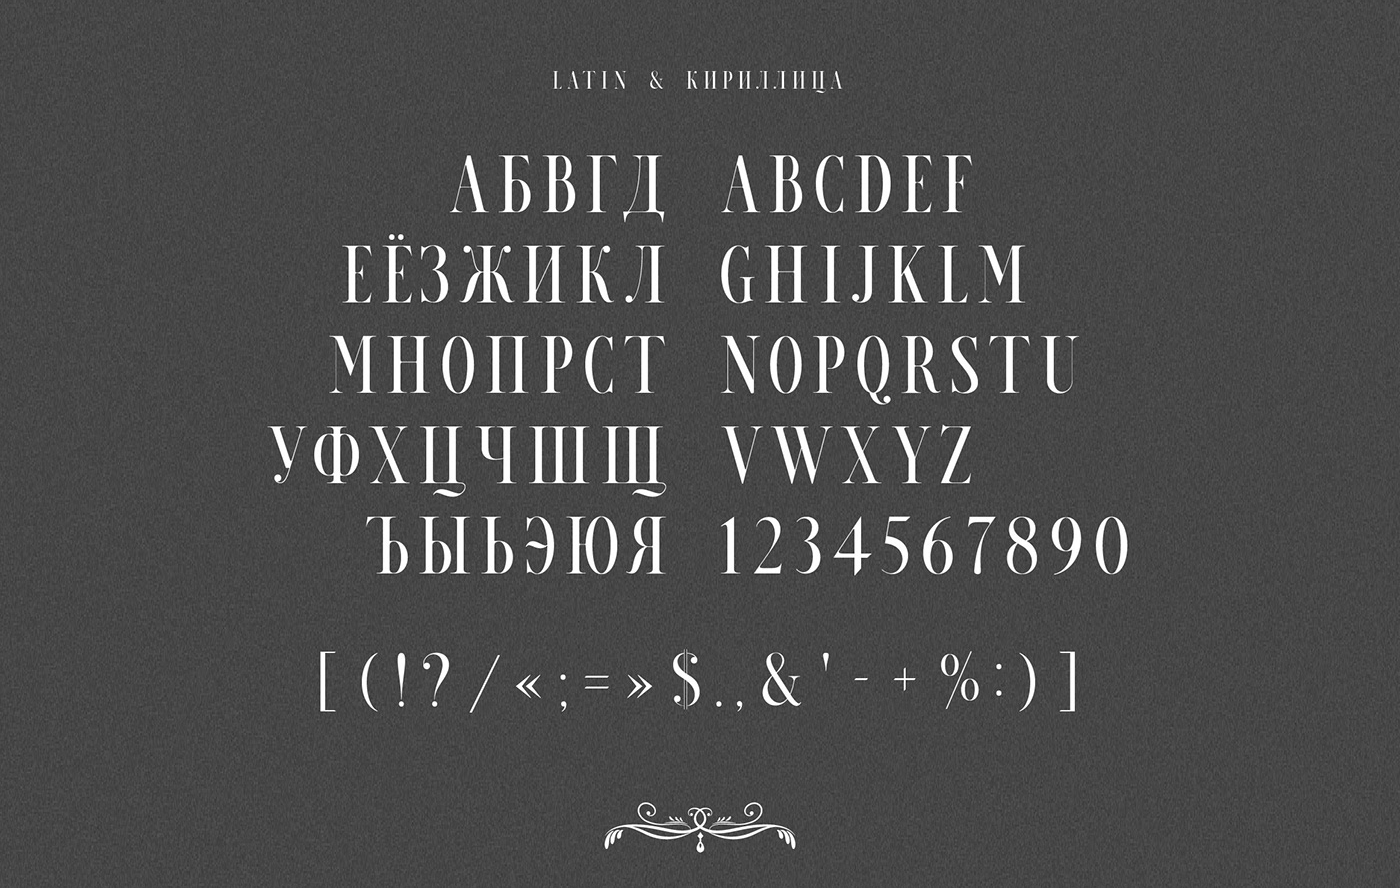 Пример шрифта Petrogradski Regular